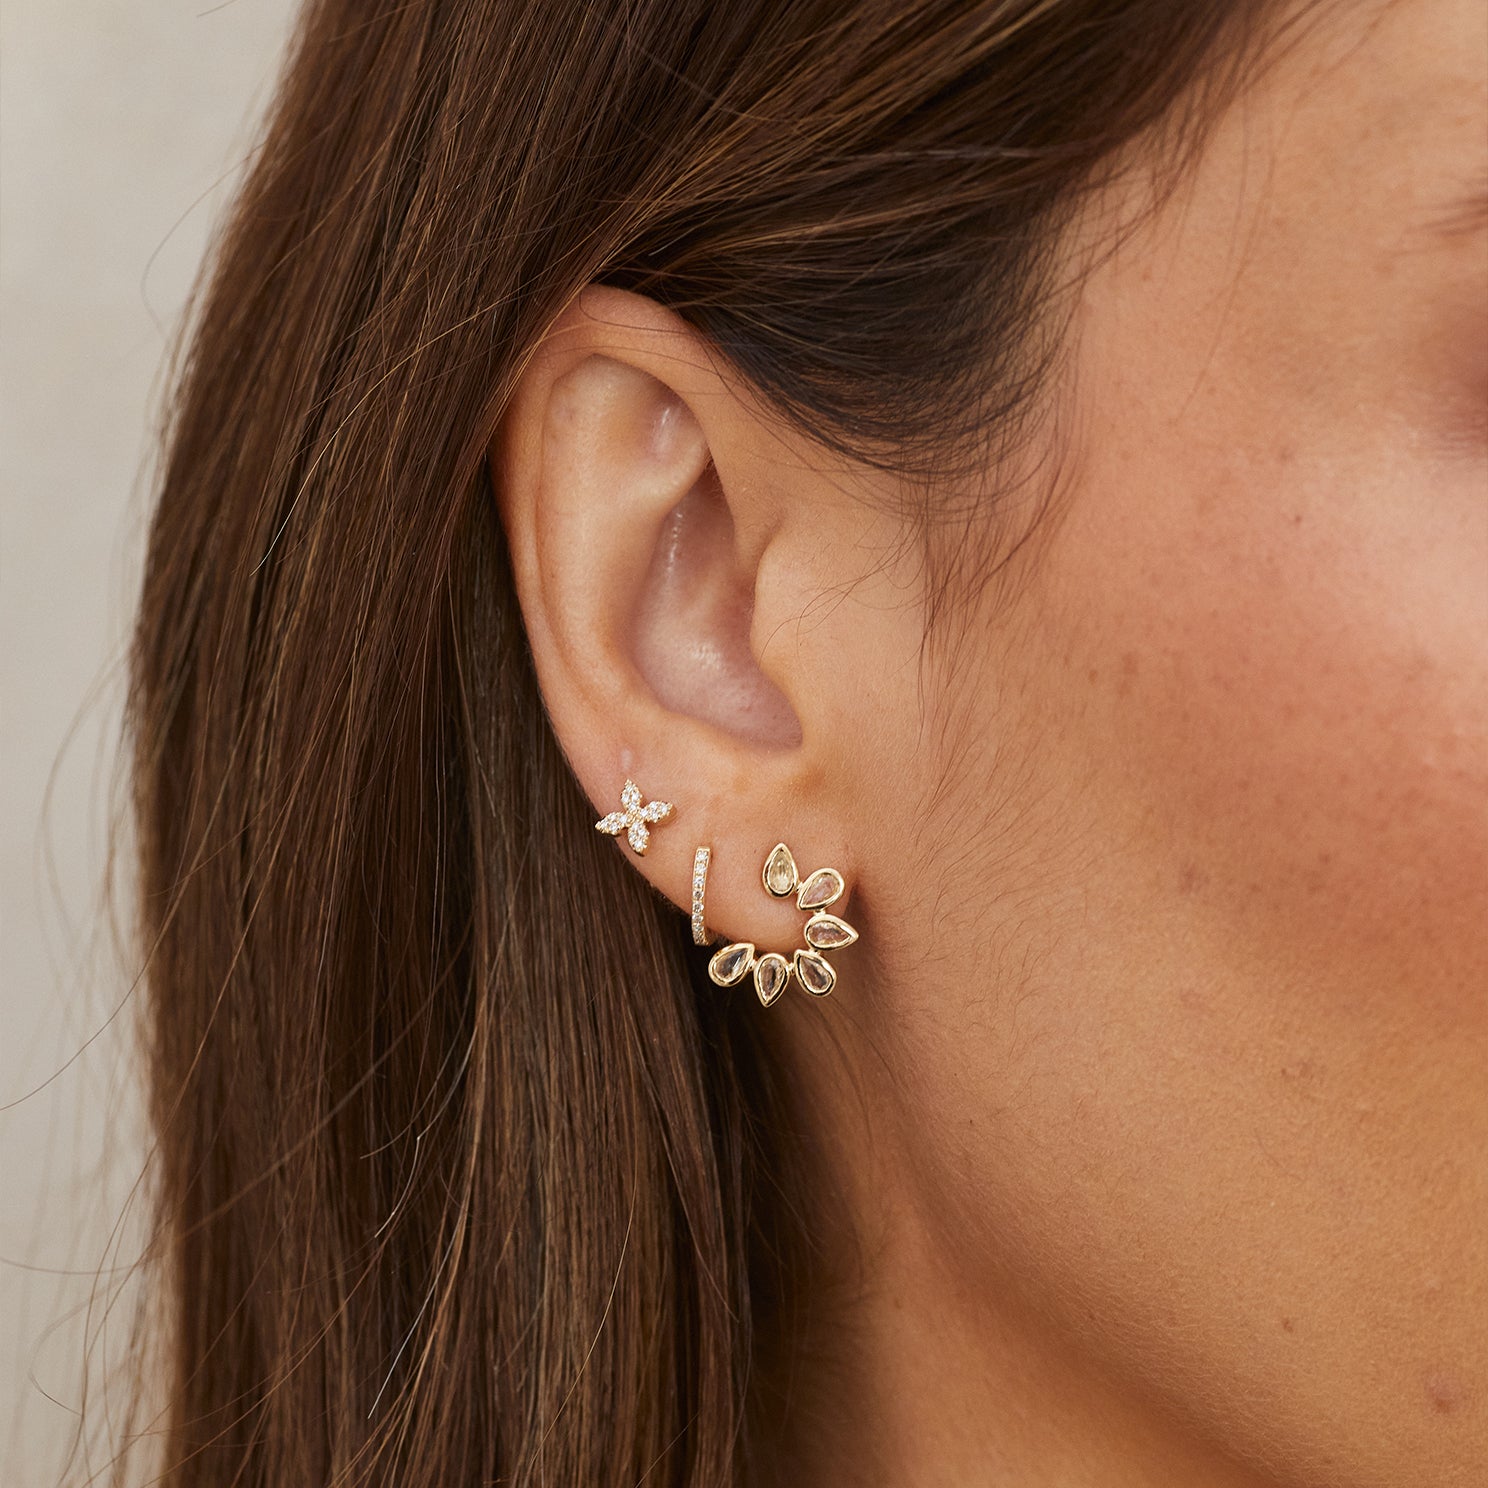 Diamond Blossom Stud Earring styled on ear lobe of model with diamond and white quartz earrings